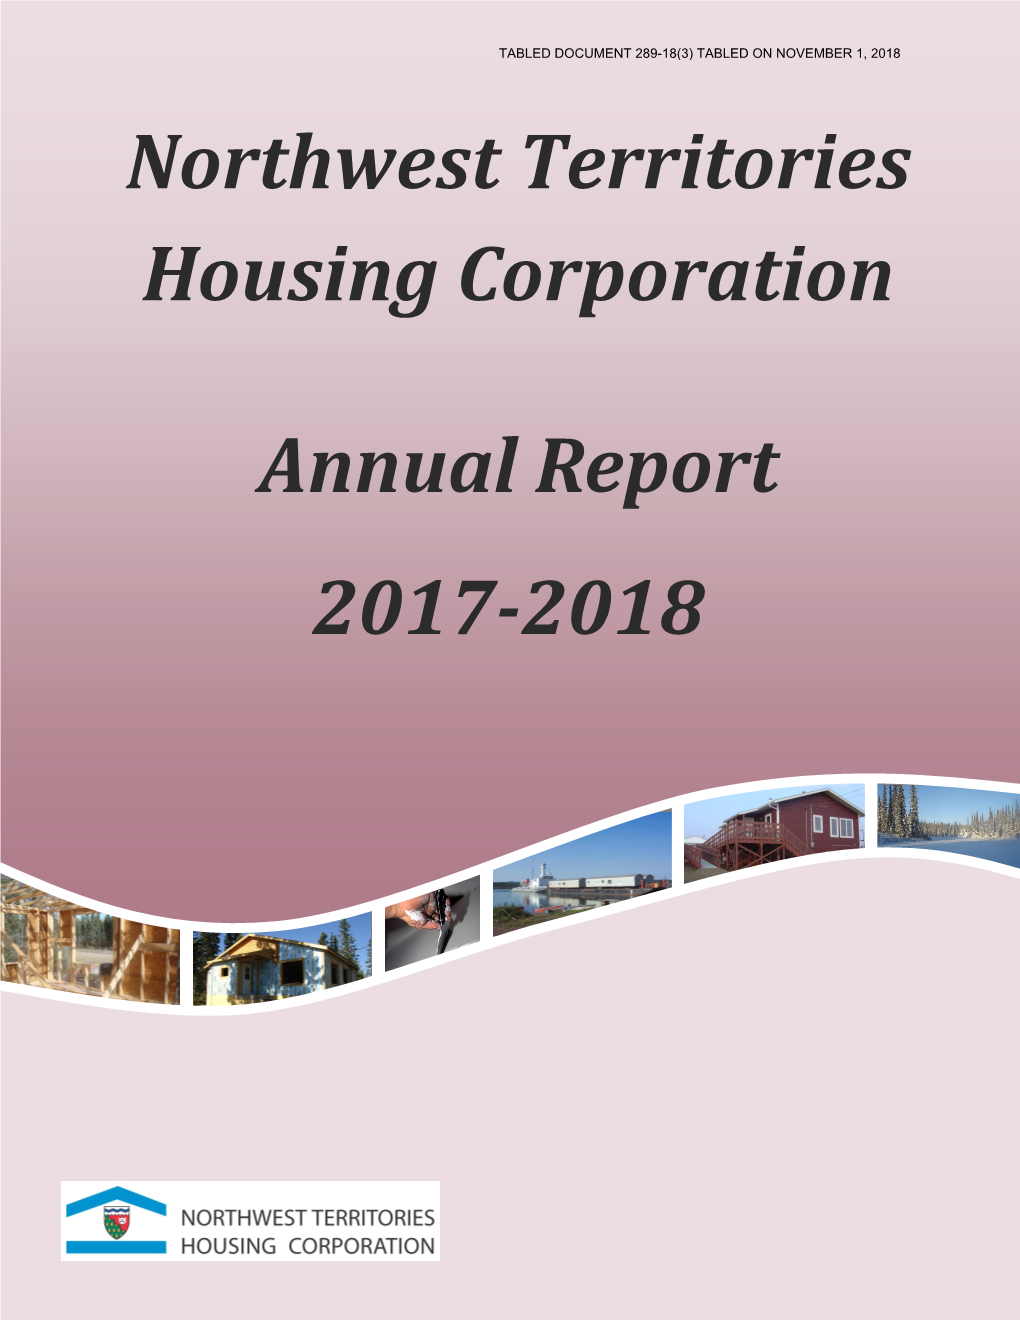 Northwest Territories Housing Corporation Annual Report 2017-2018